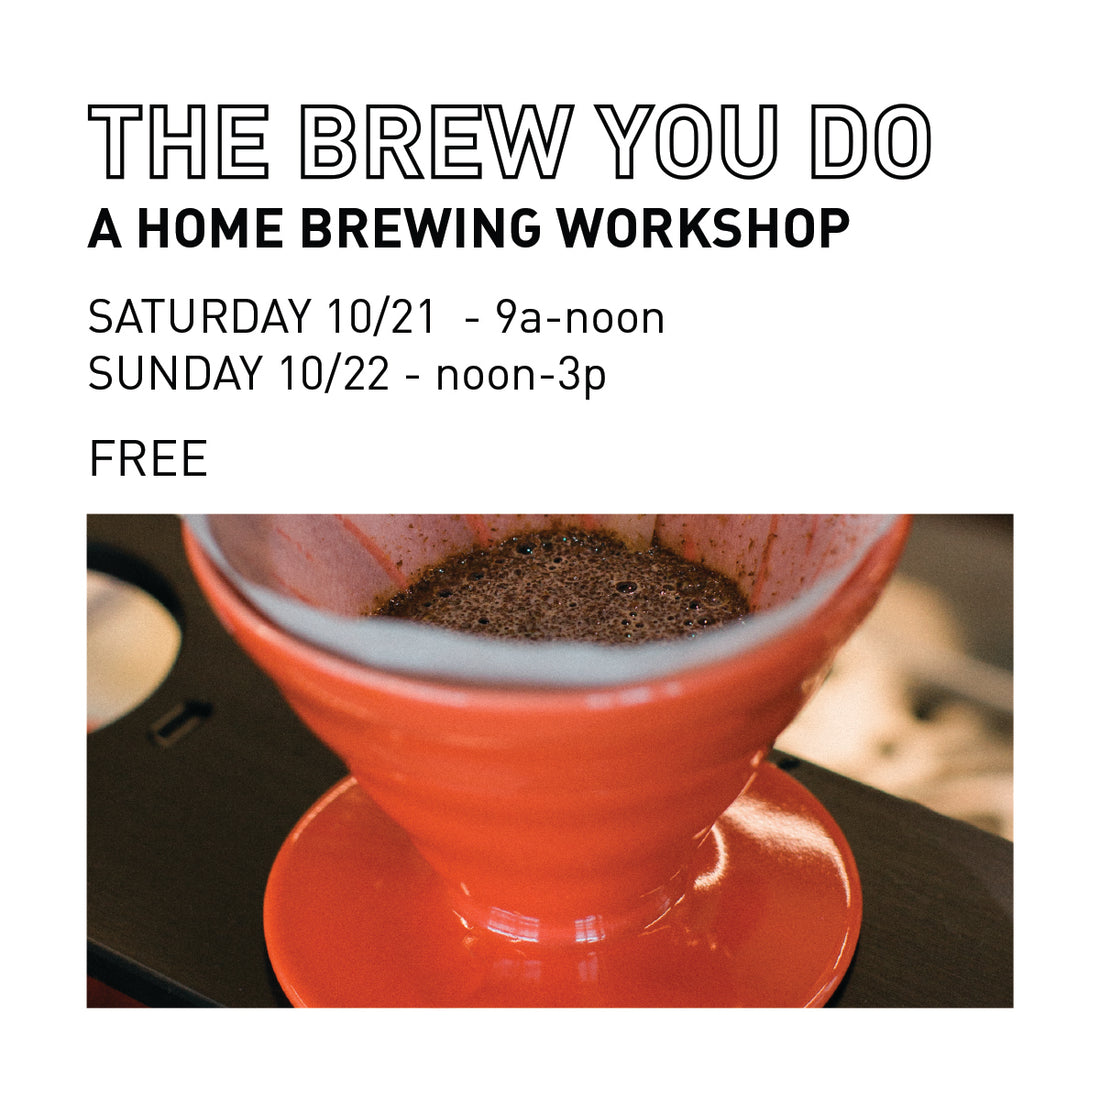 Sump Coffee Nashville: Home brew workshop Sat and Sun 10/21 & 10/22